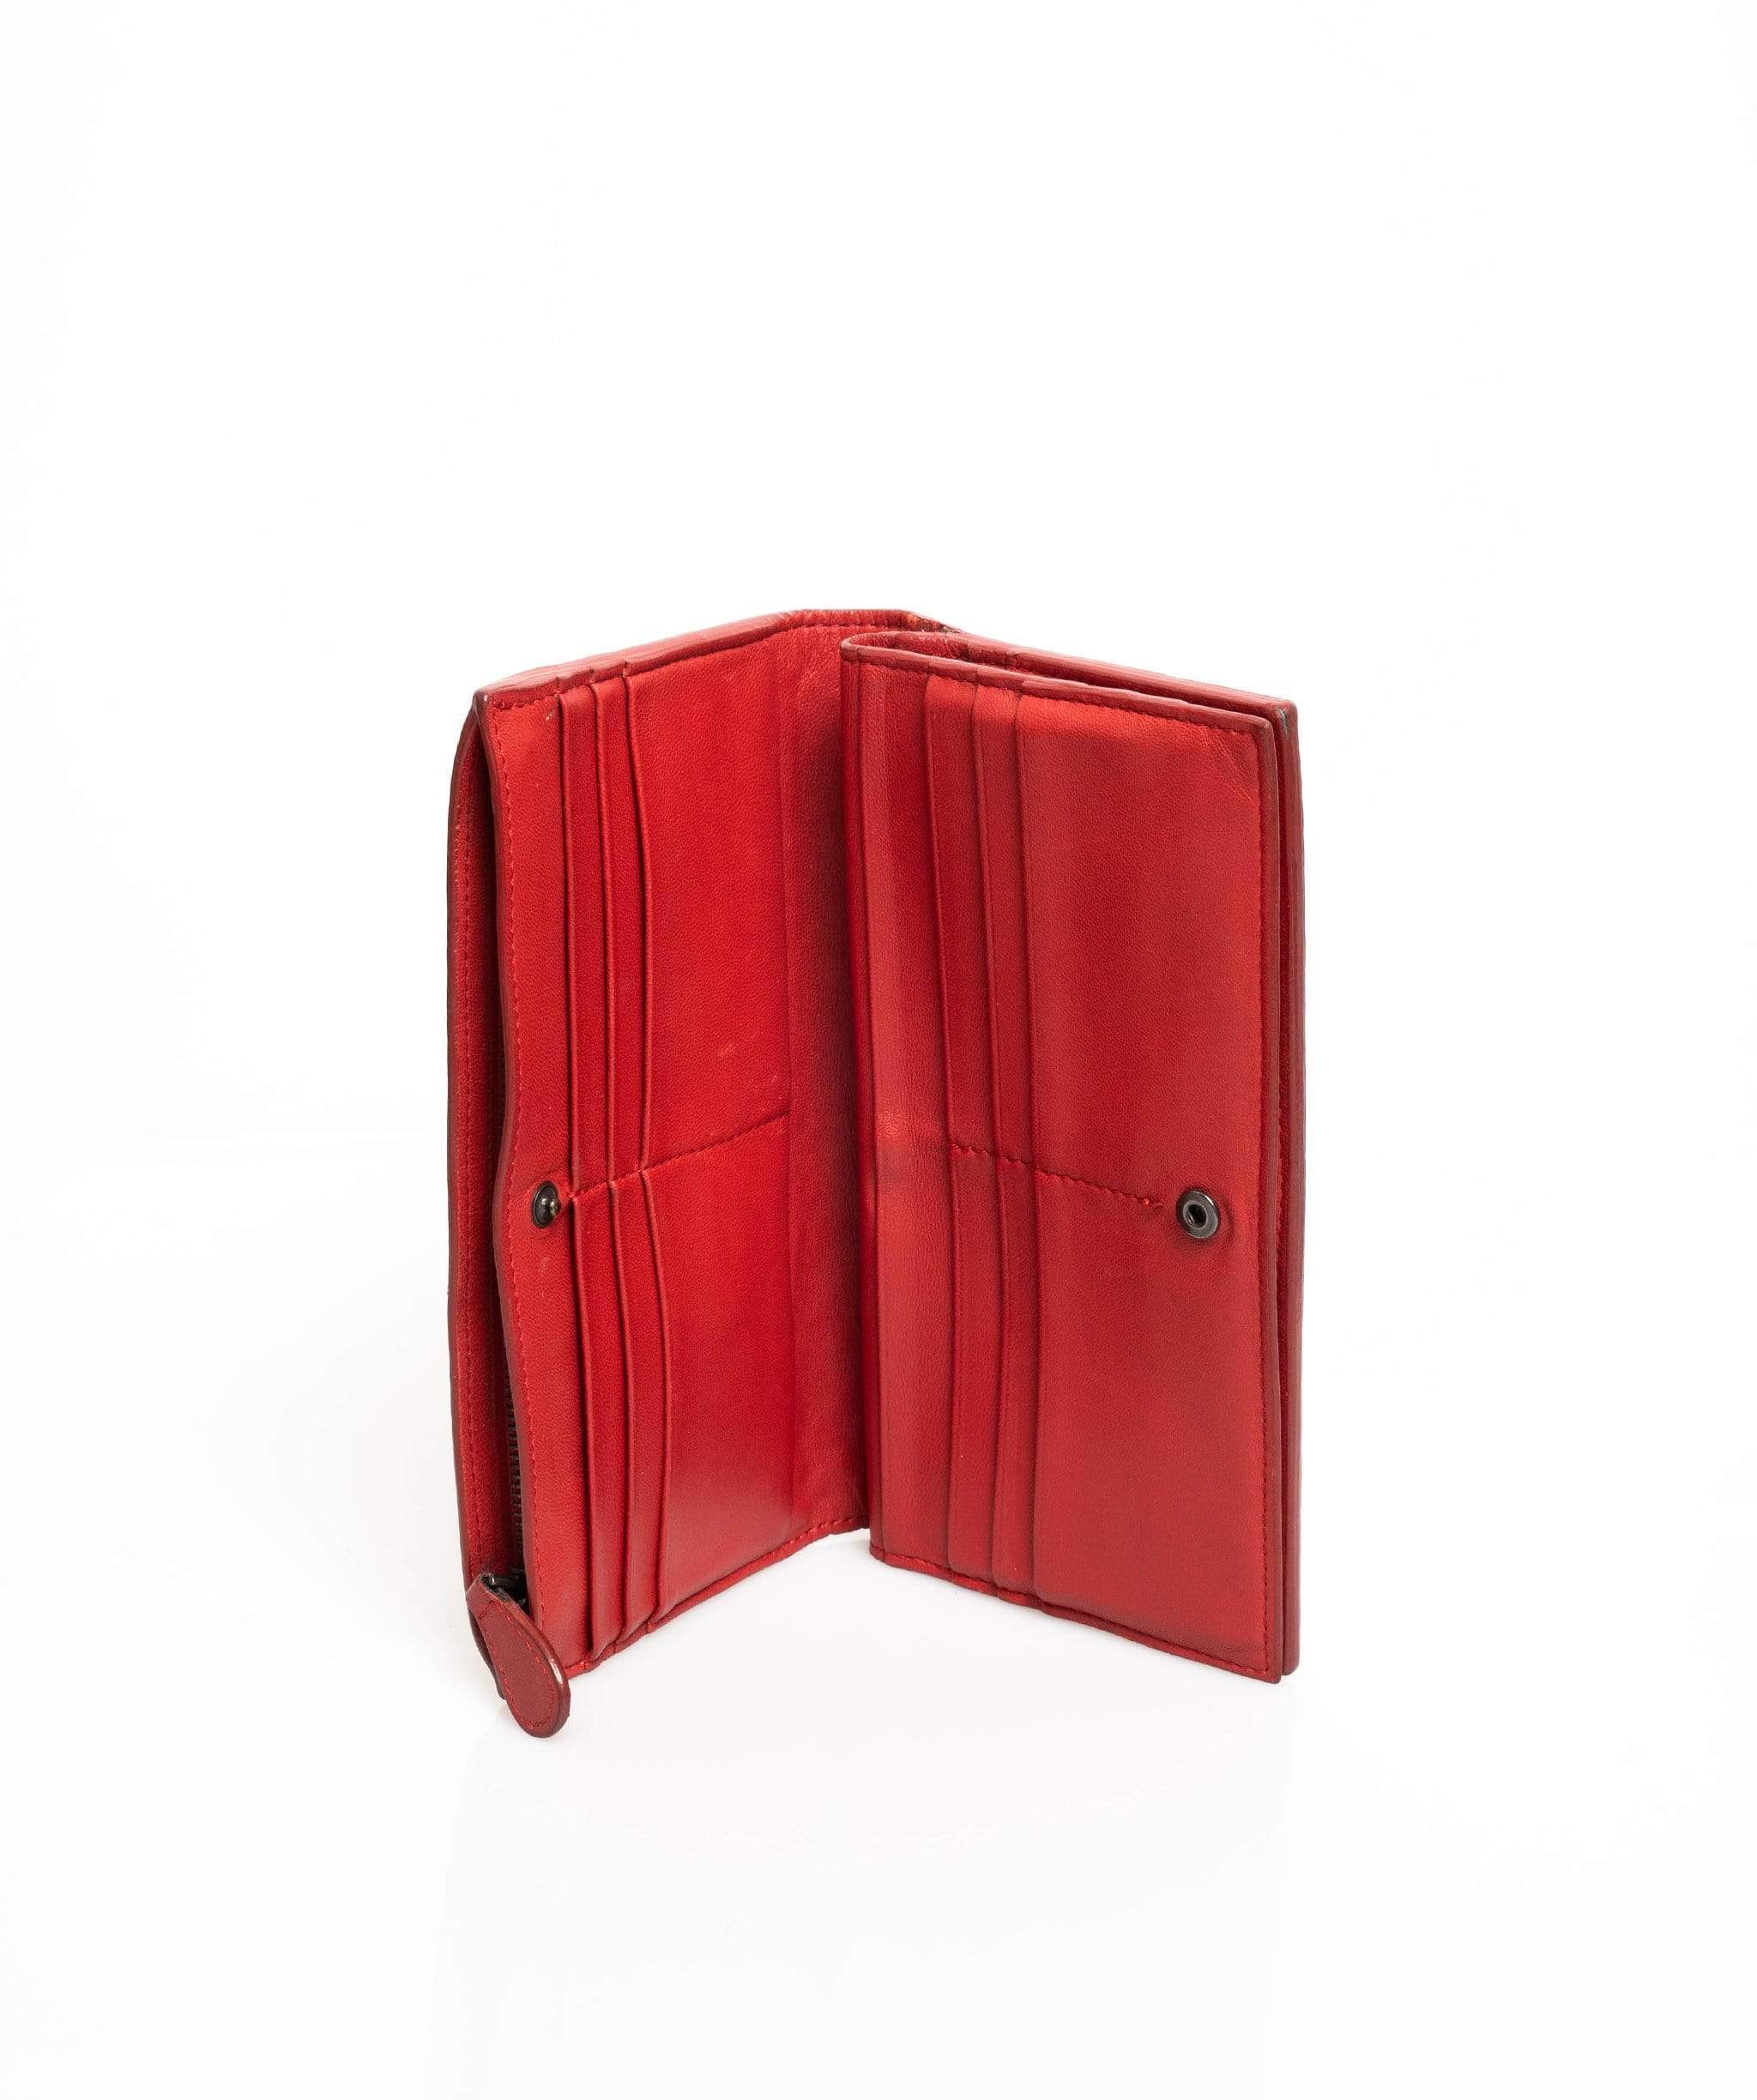 Bottega Veneta Bottega Veneta Intrecciato Red Leather Wallet AGL1004